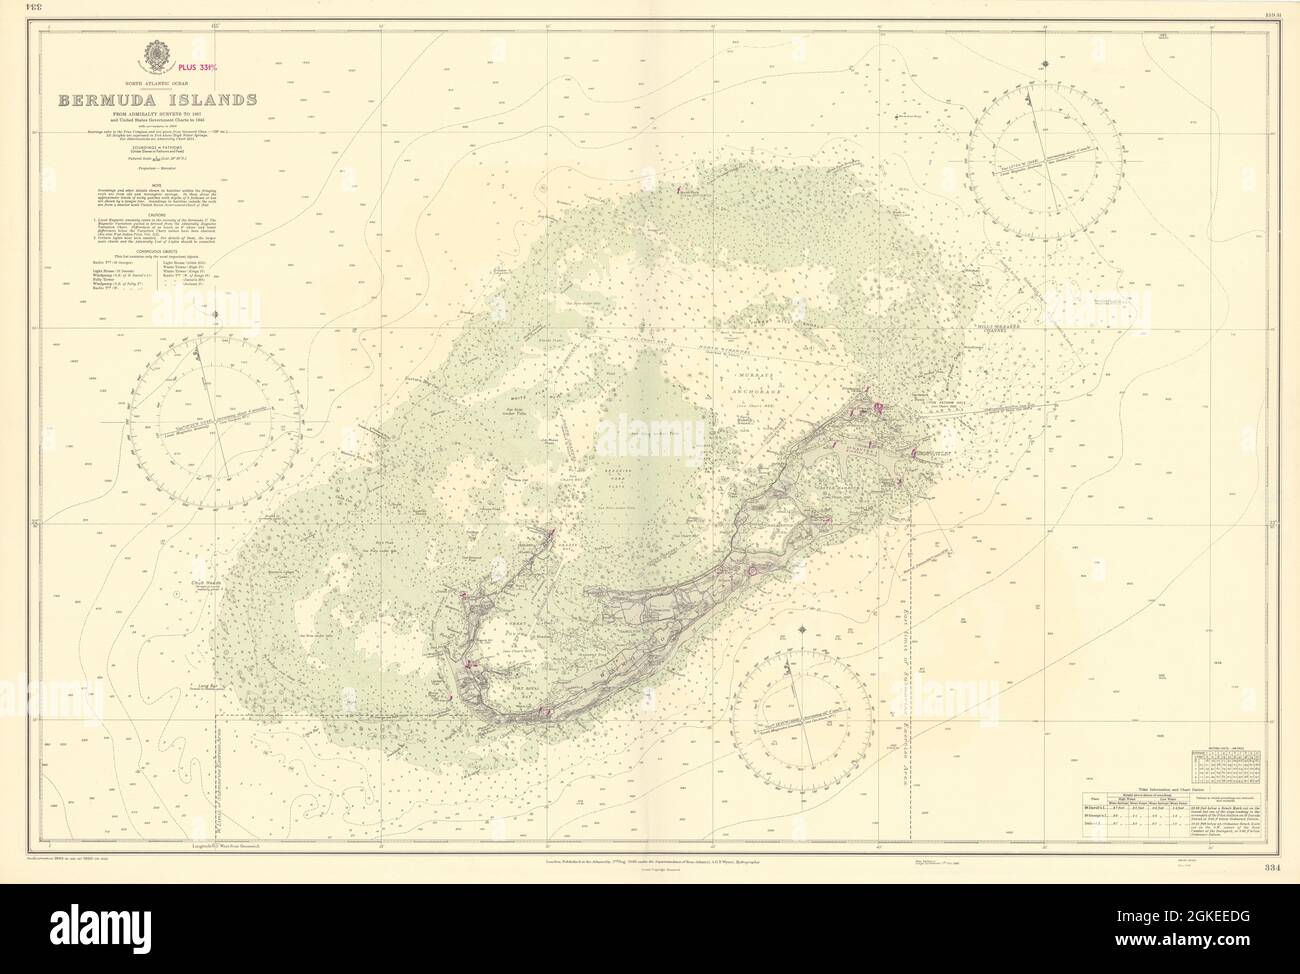 Bermuda Islands, North Atlantic Ocean. ADMIRALTY sea chart 1946 (1950) old map Stock Photo